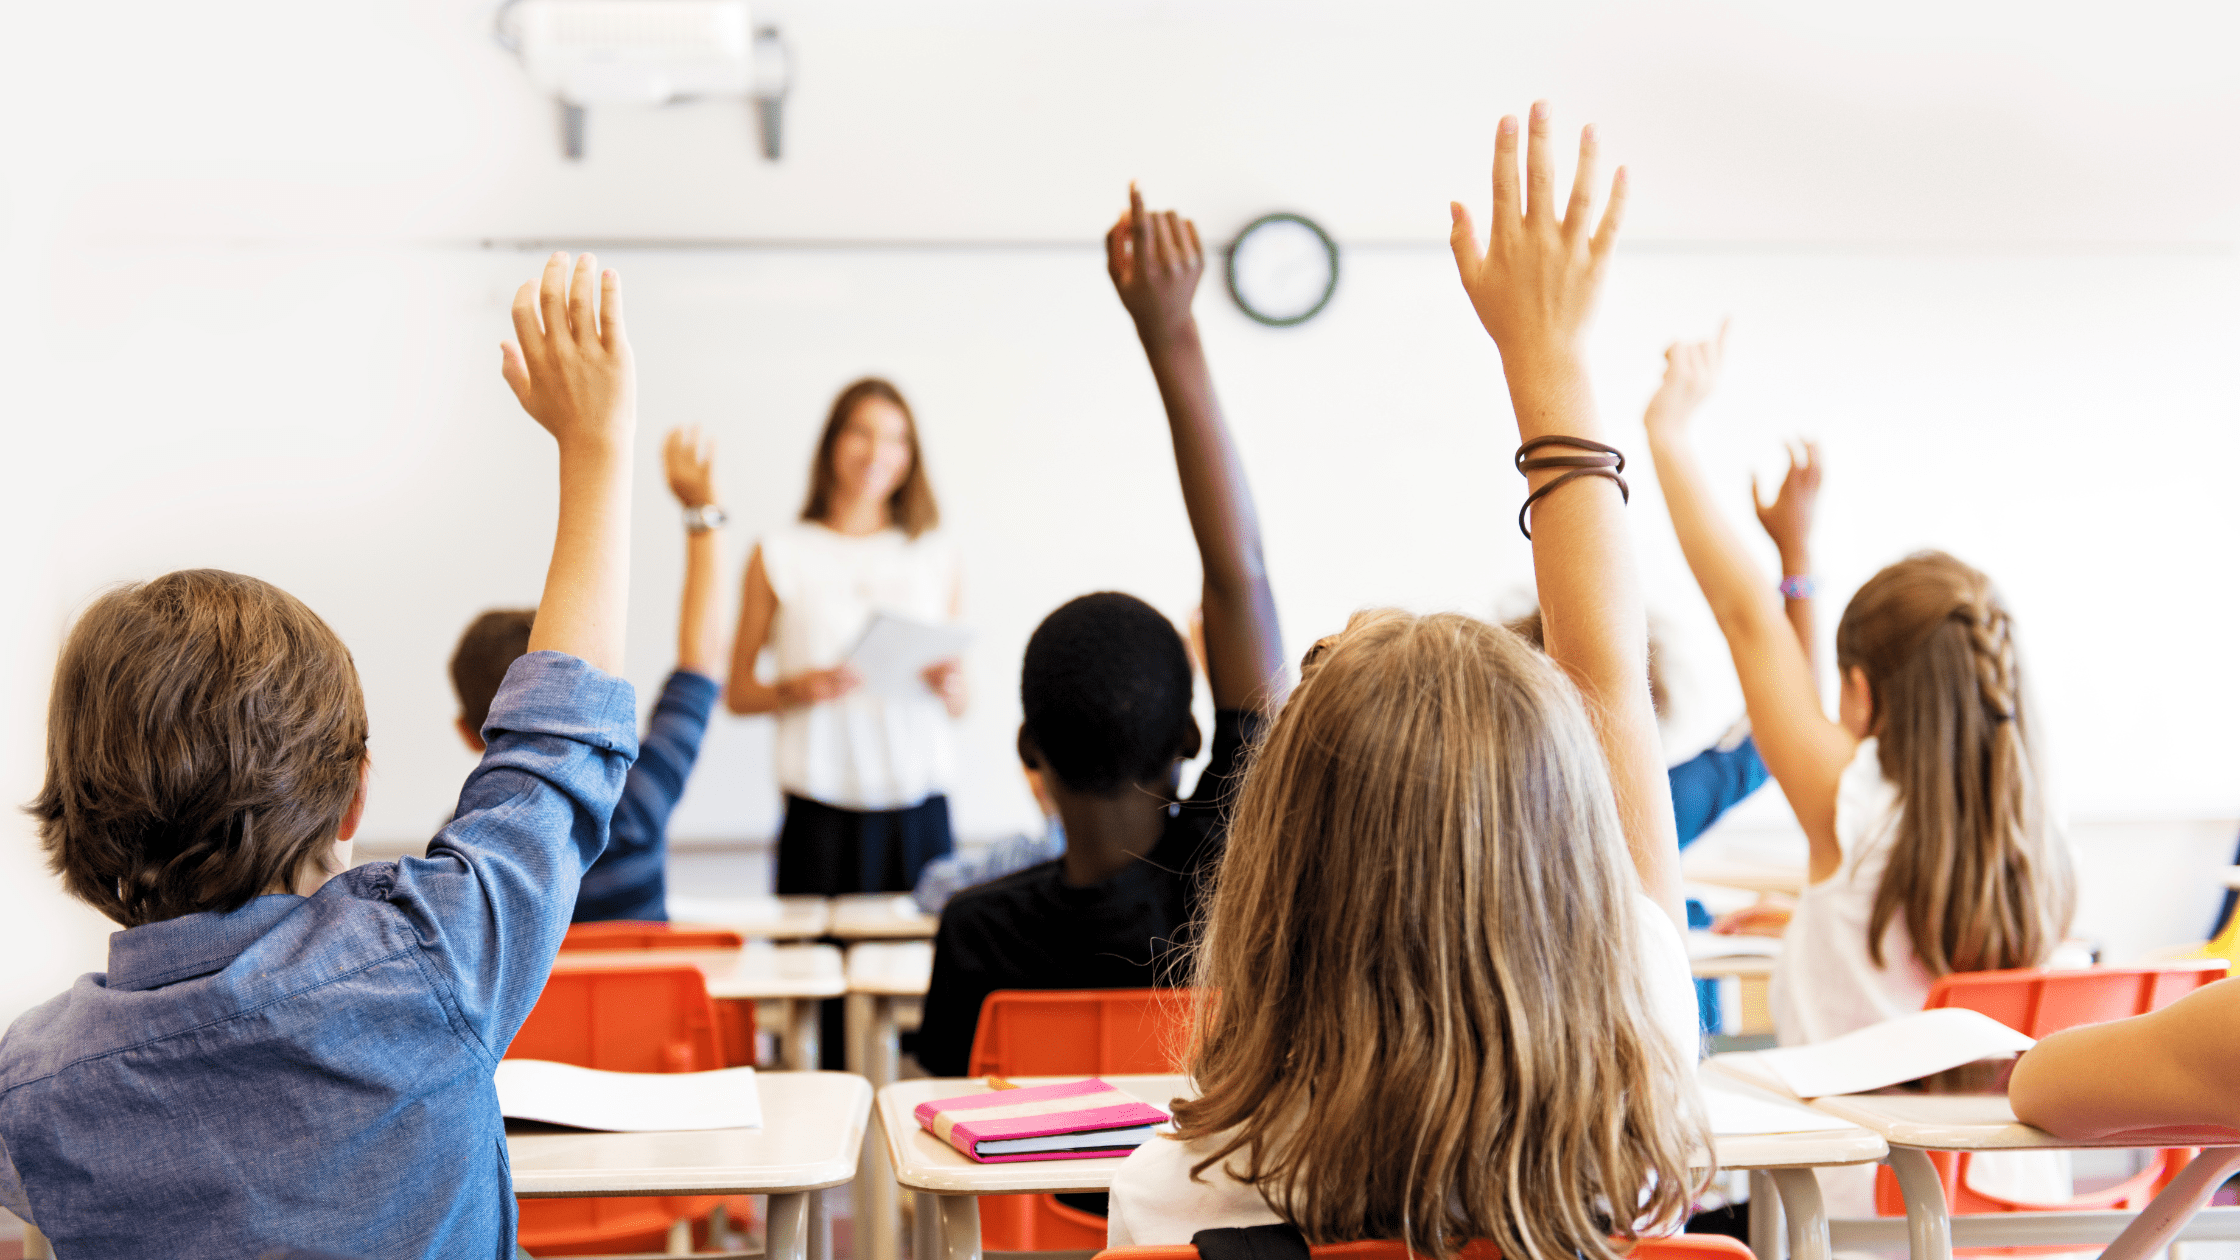 Kids raising their hands in a classroom